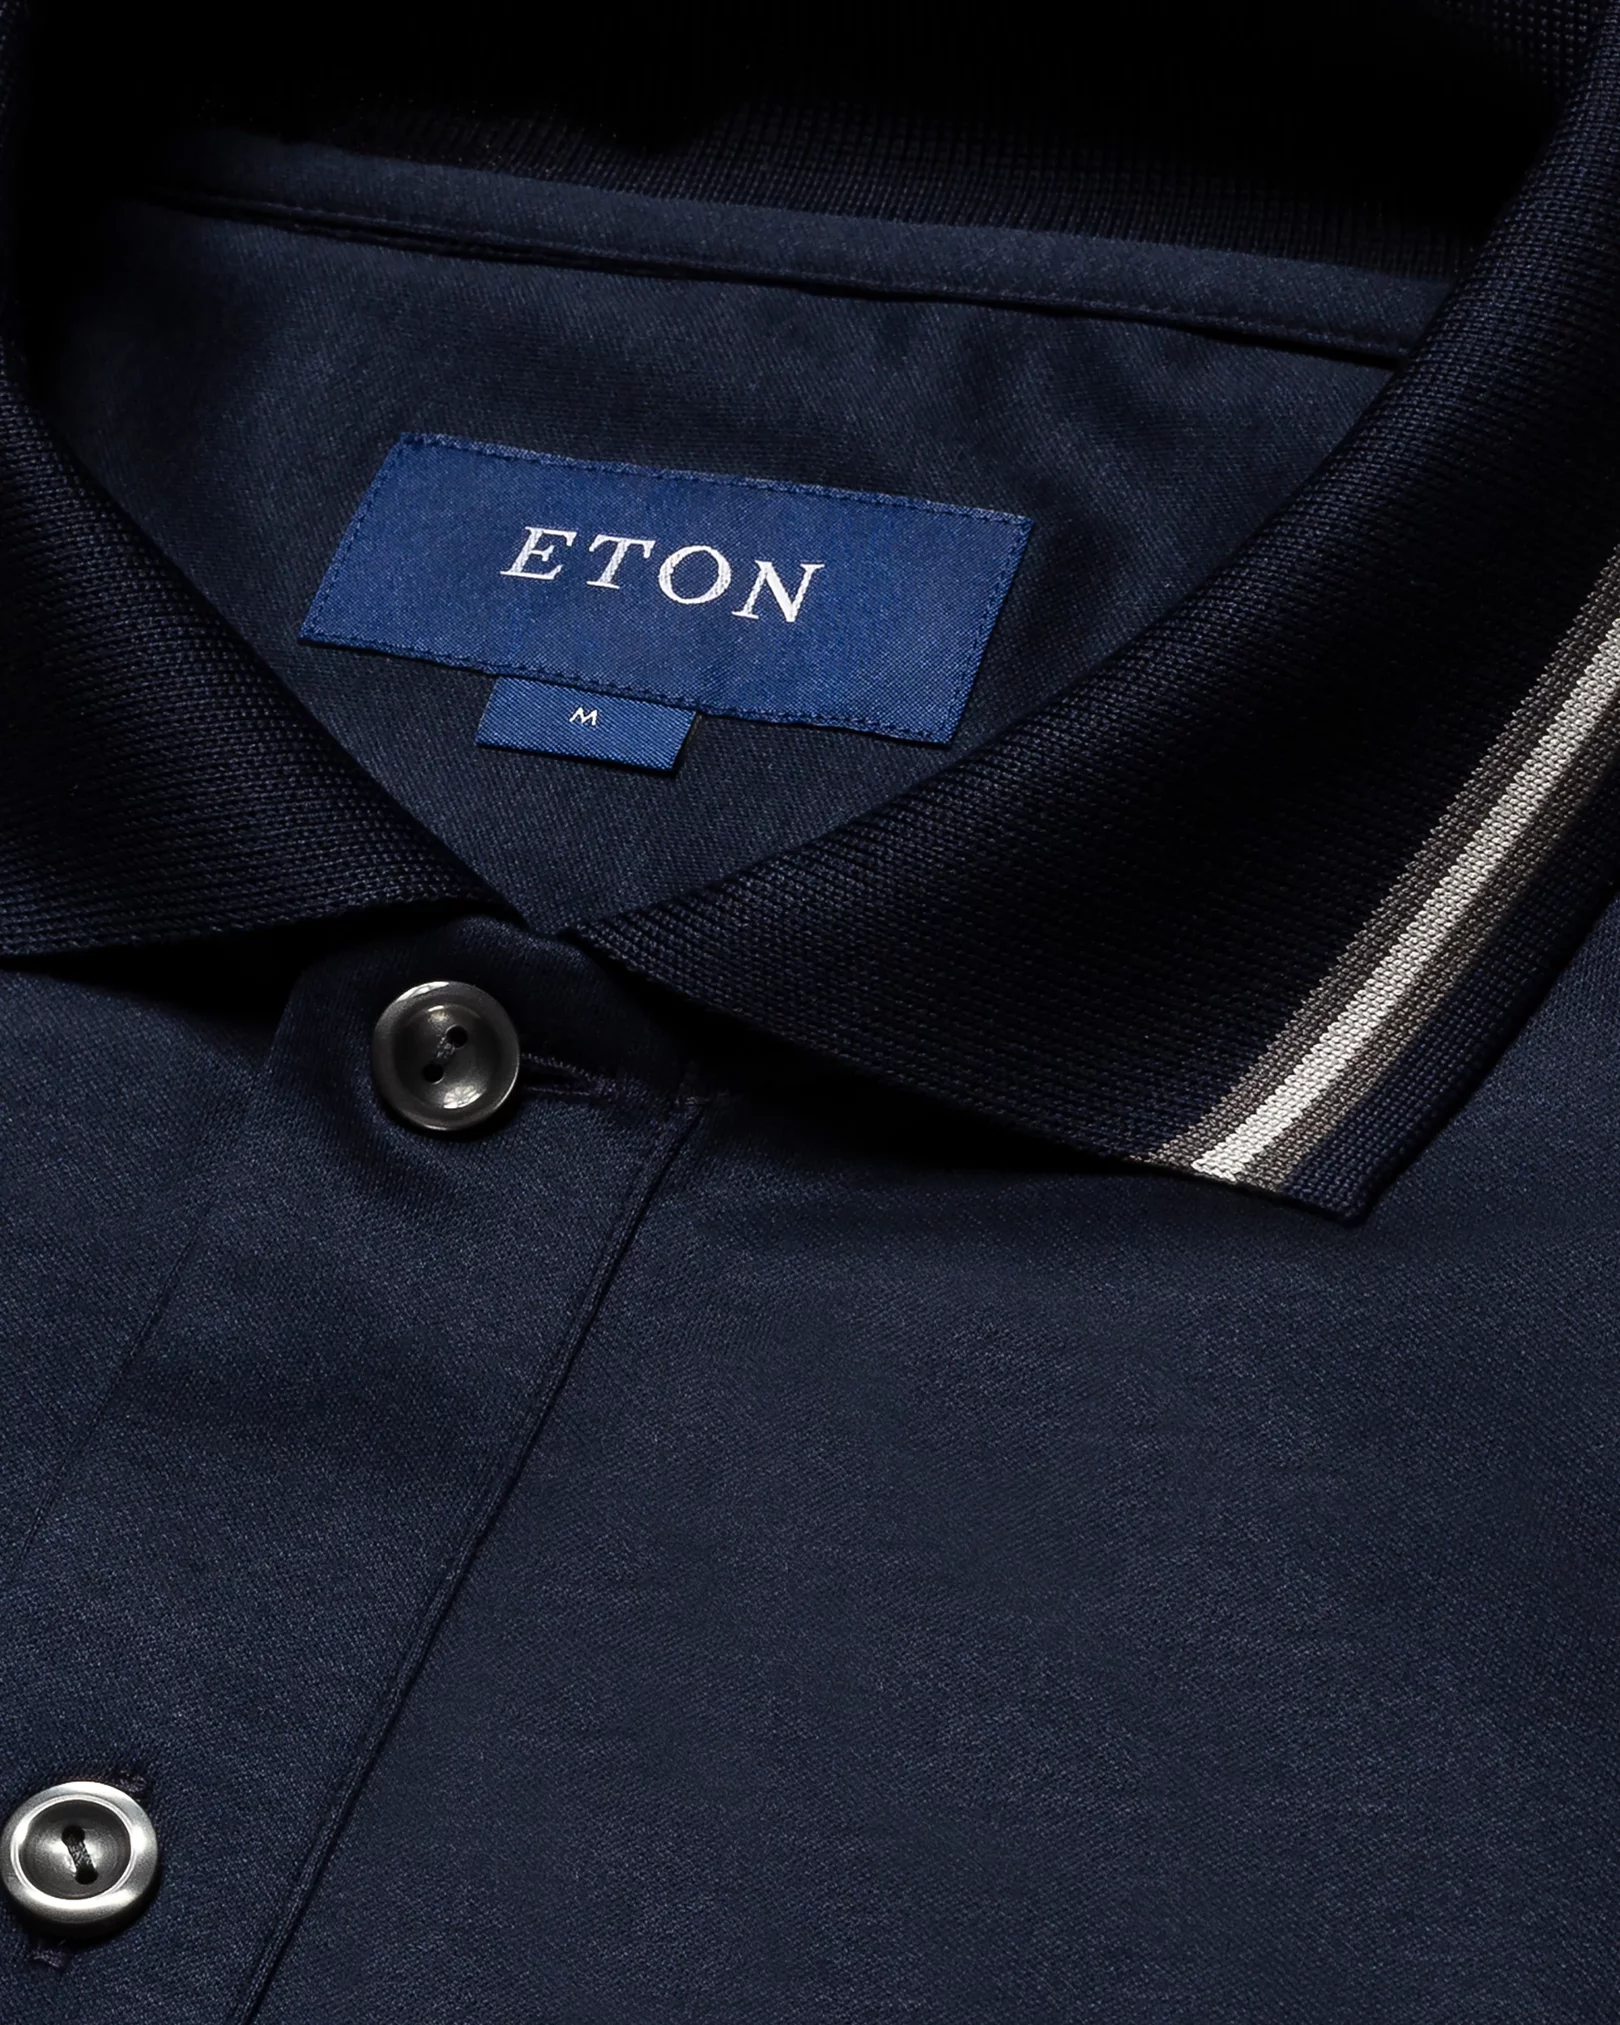 Eton - navy blue jersey knitted